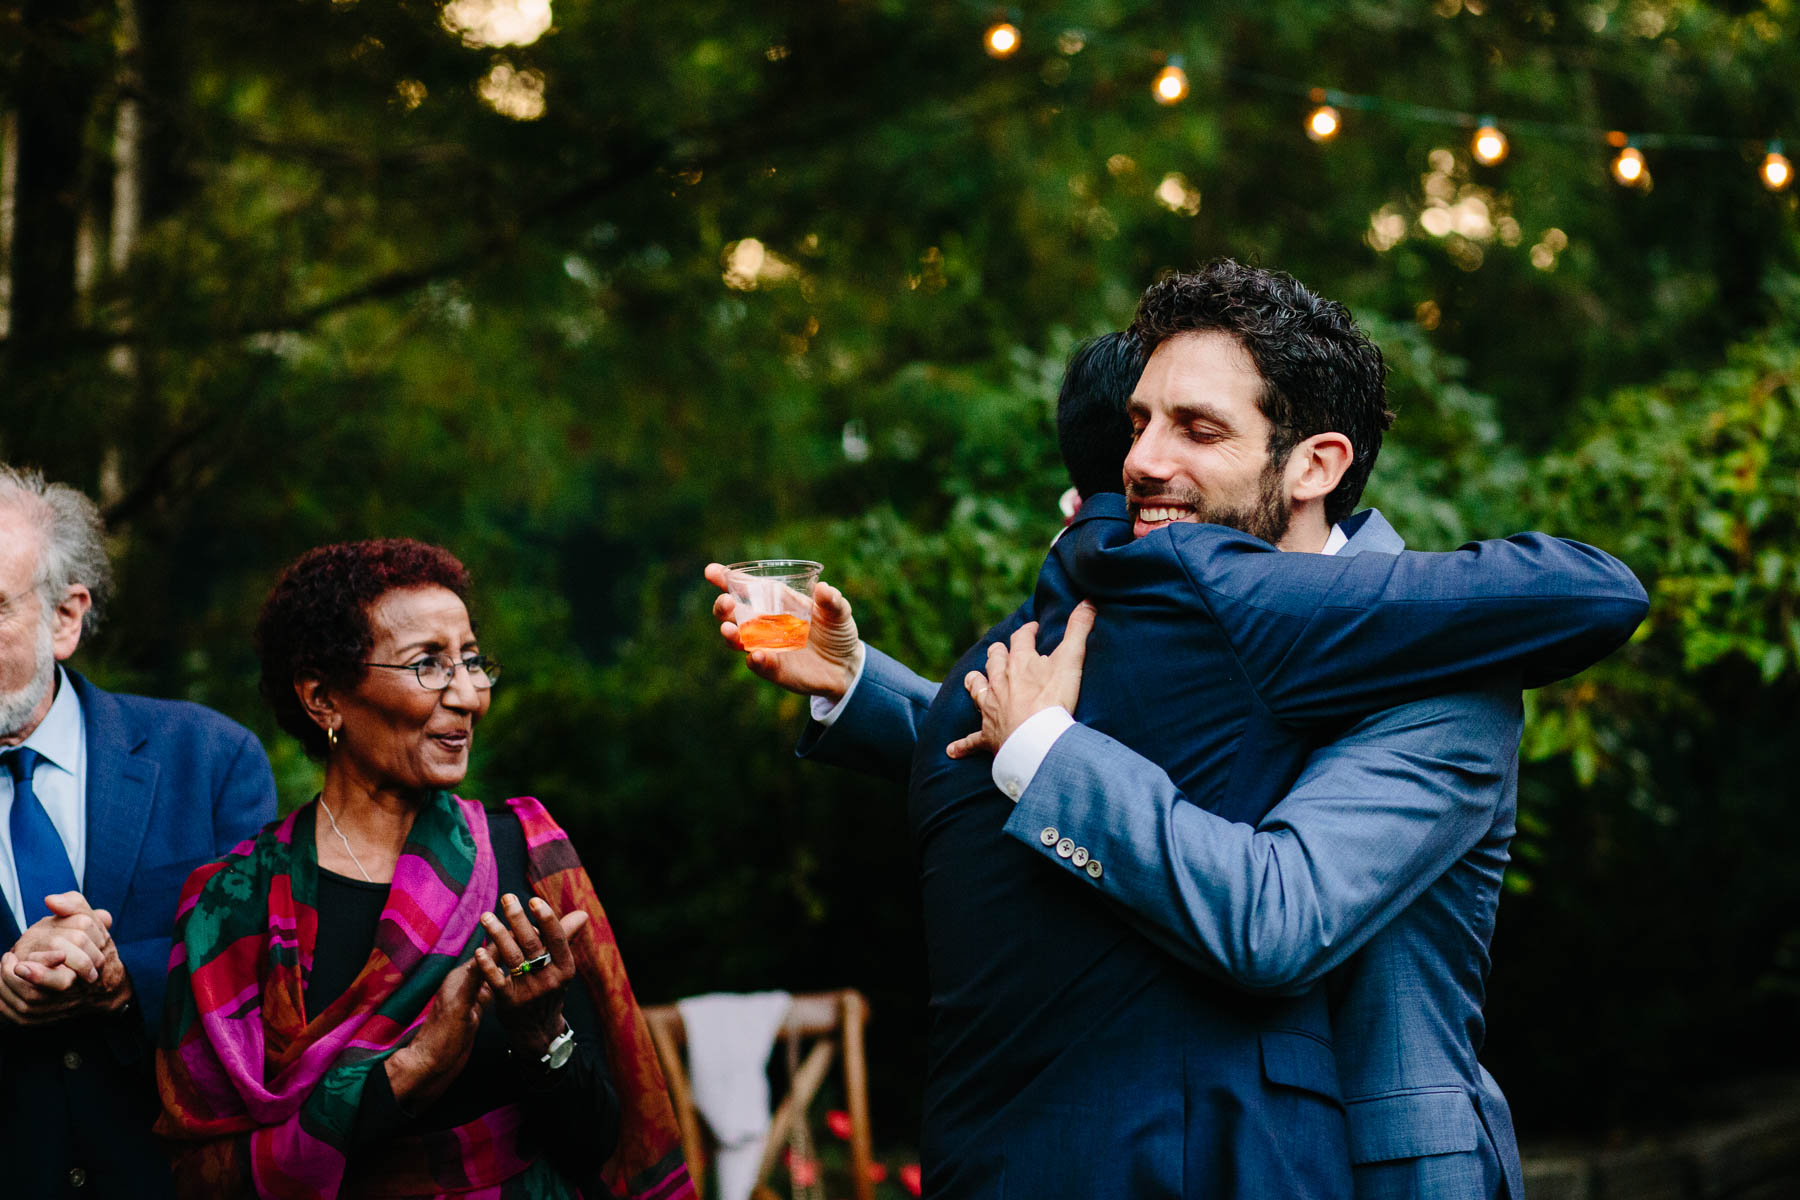 weddings toasts in the backyard, Cambridge MA | Kelly Benvenuto Photography